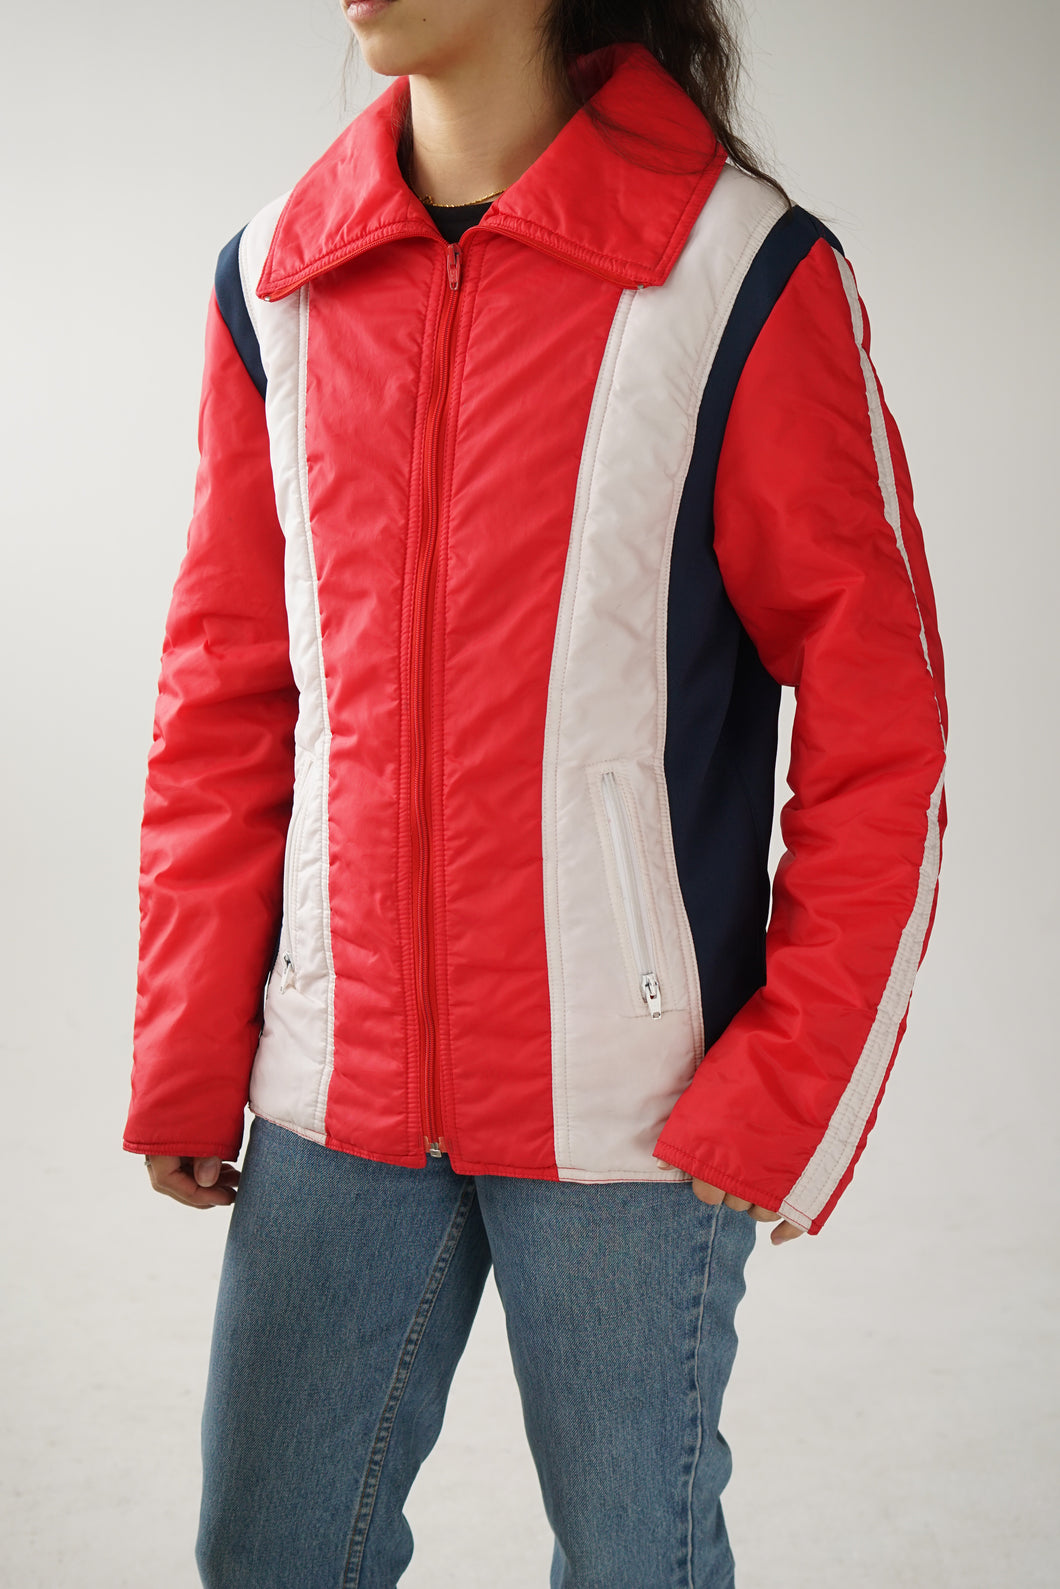 Vintage 70s jacket Jean-Claude Killy